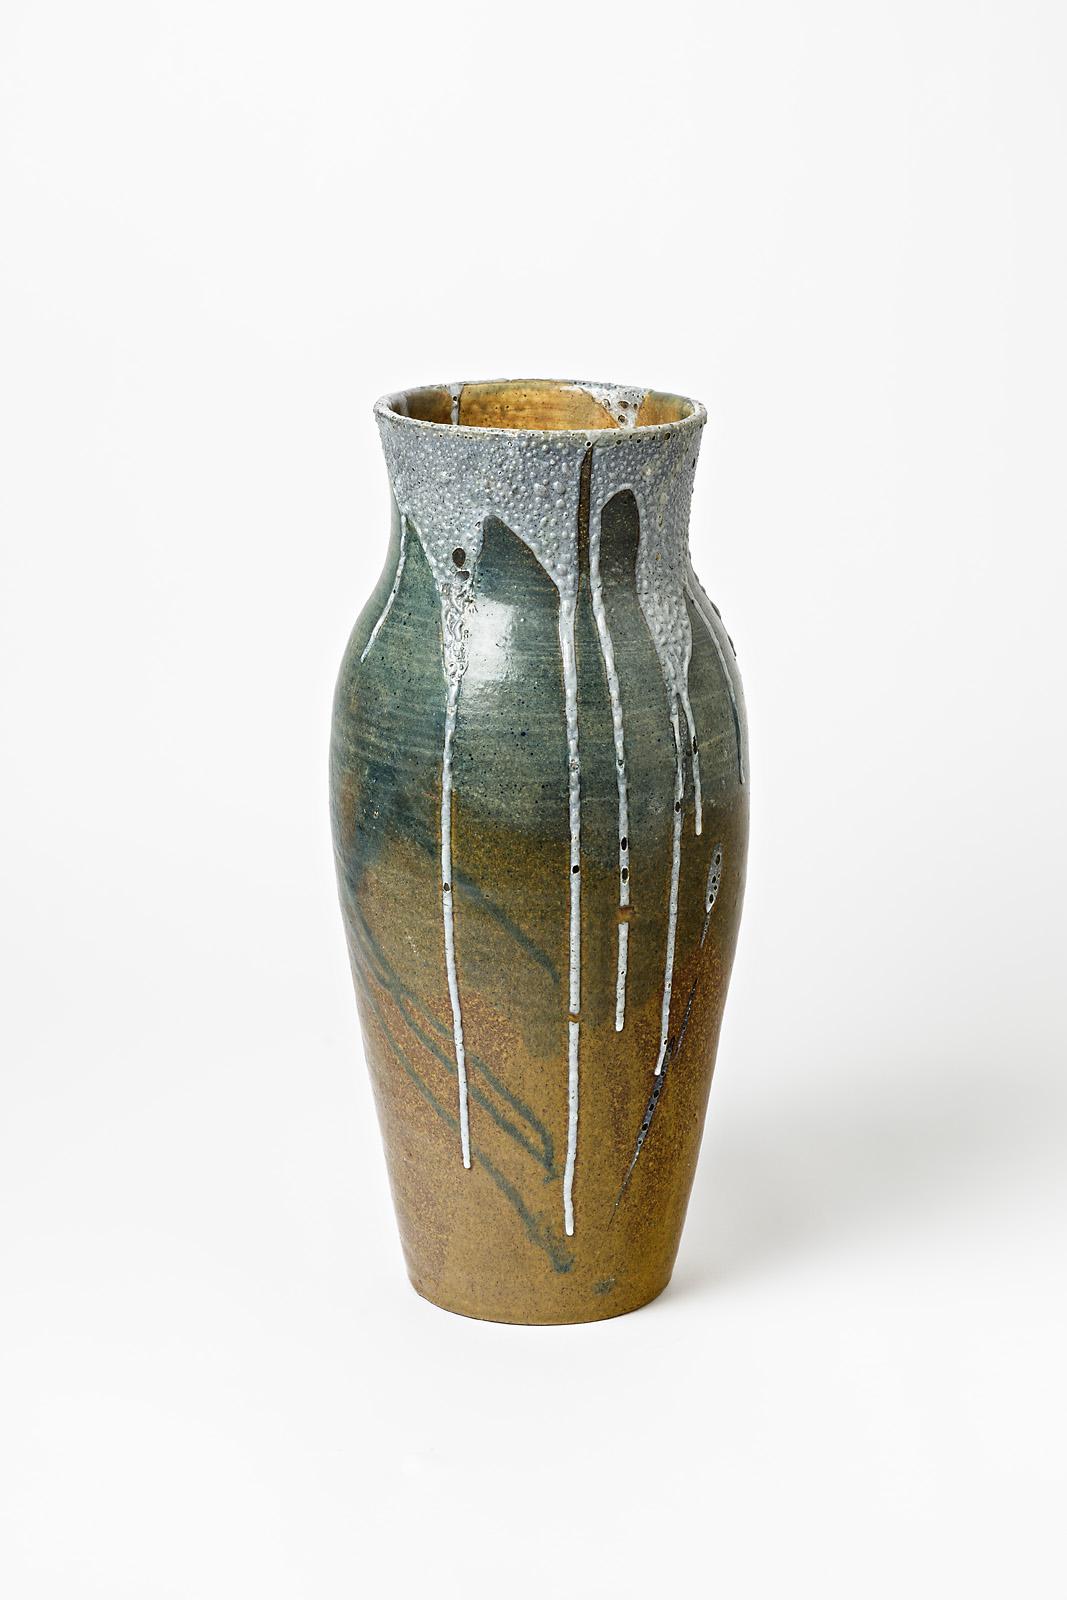 A big ceramic vase by Eugene Lion with glaze decoration.
Signed under the base 